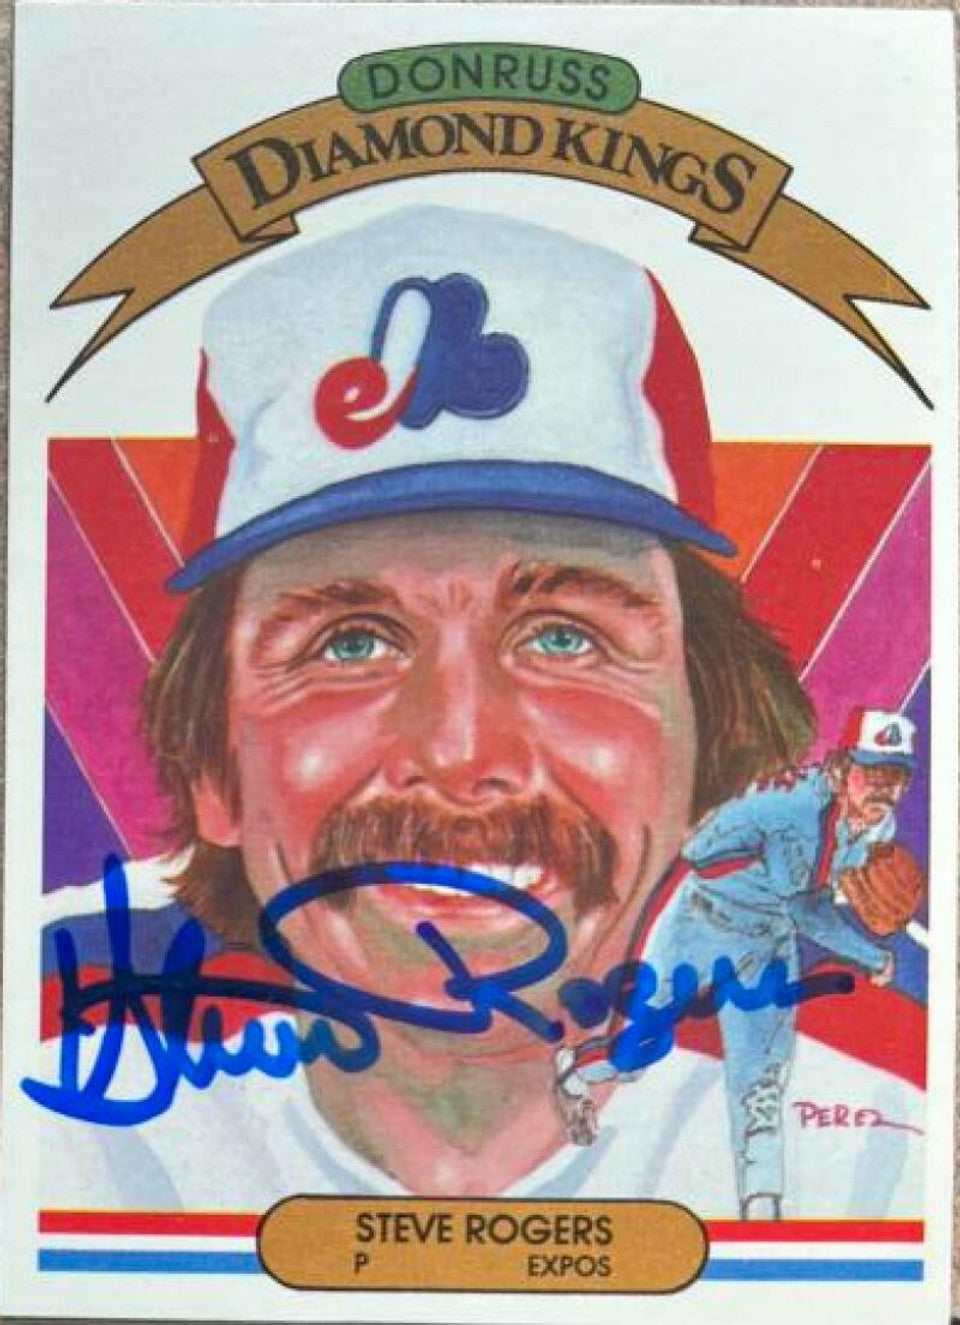 Steve Rogers Signed 1983 Donruss Diamond Kings Baseball Card - Montreal Expos